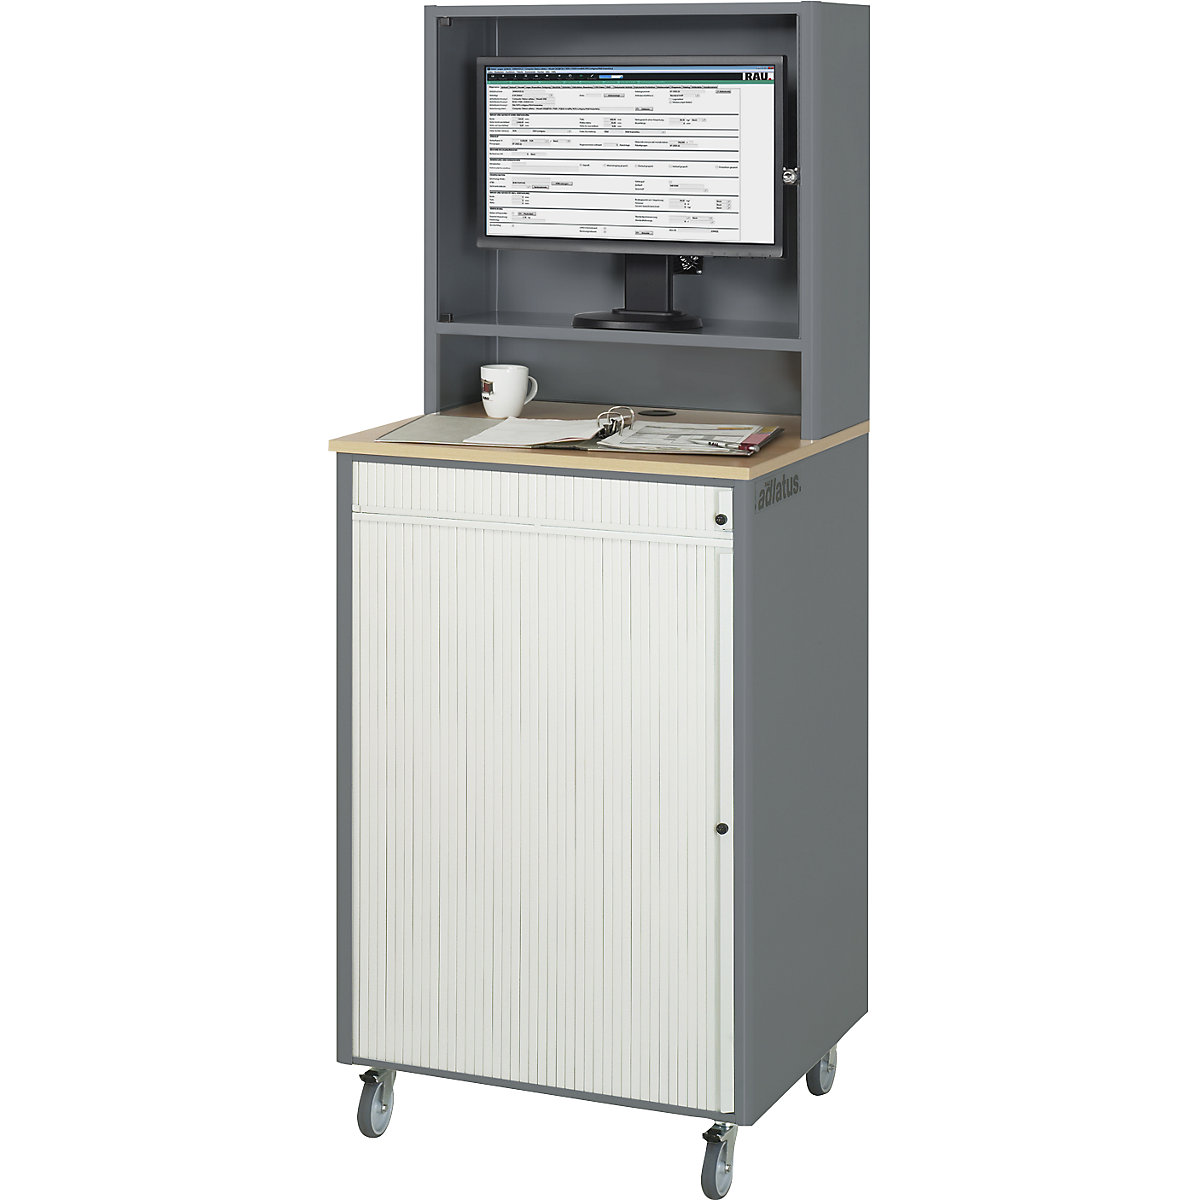 Computerwerkplek – RAU, h x b x d = 1810 x 720 x 660 mm, met monitorbehuizing, verrijdbaar, antraciet metallic / gentiaanblauw-13